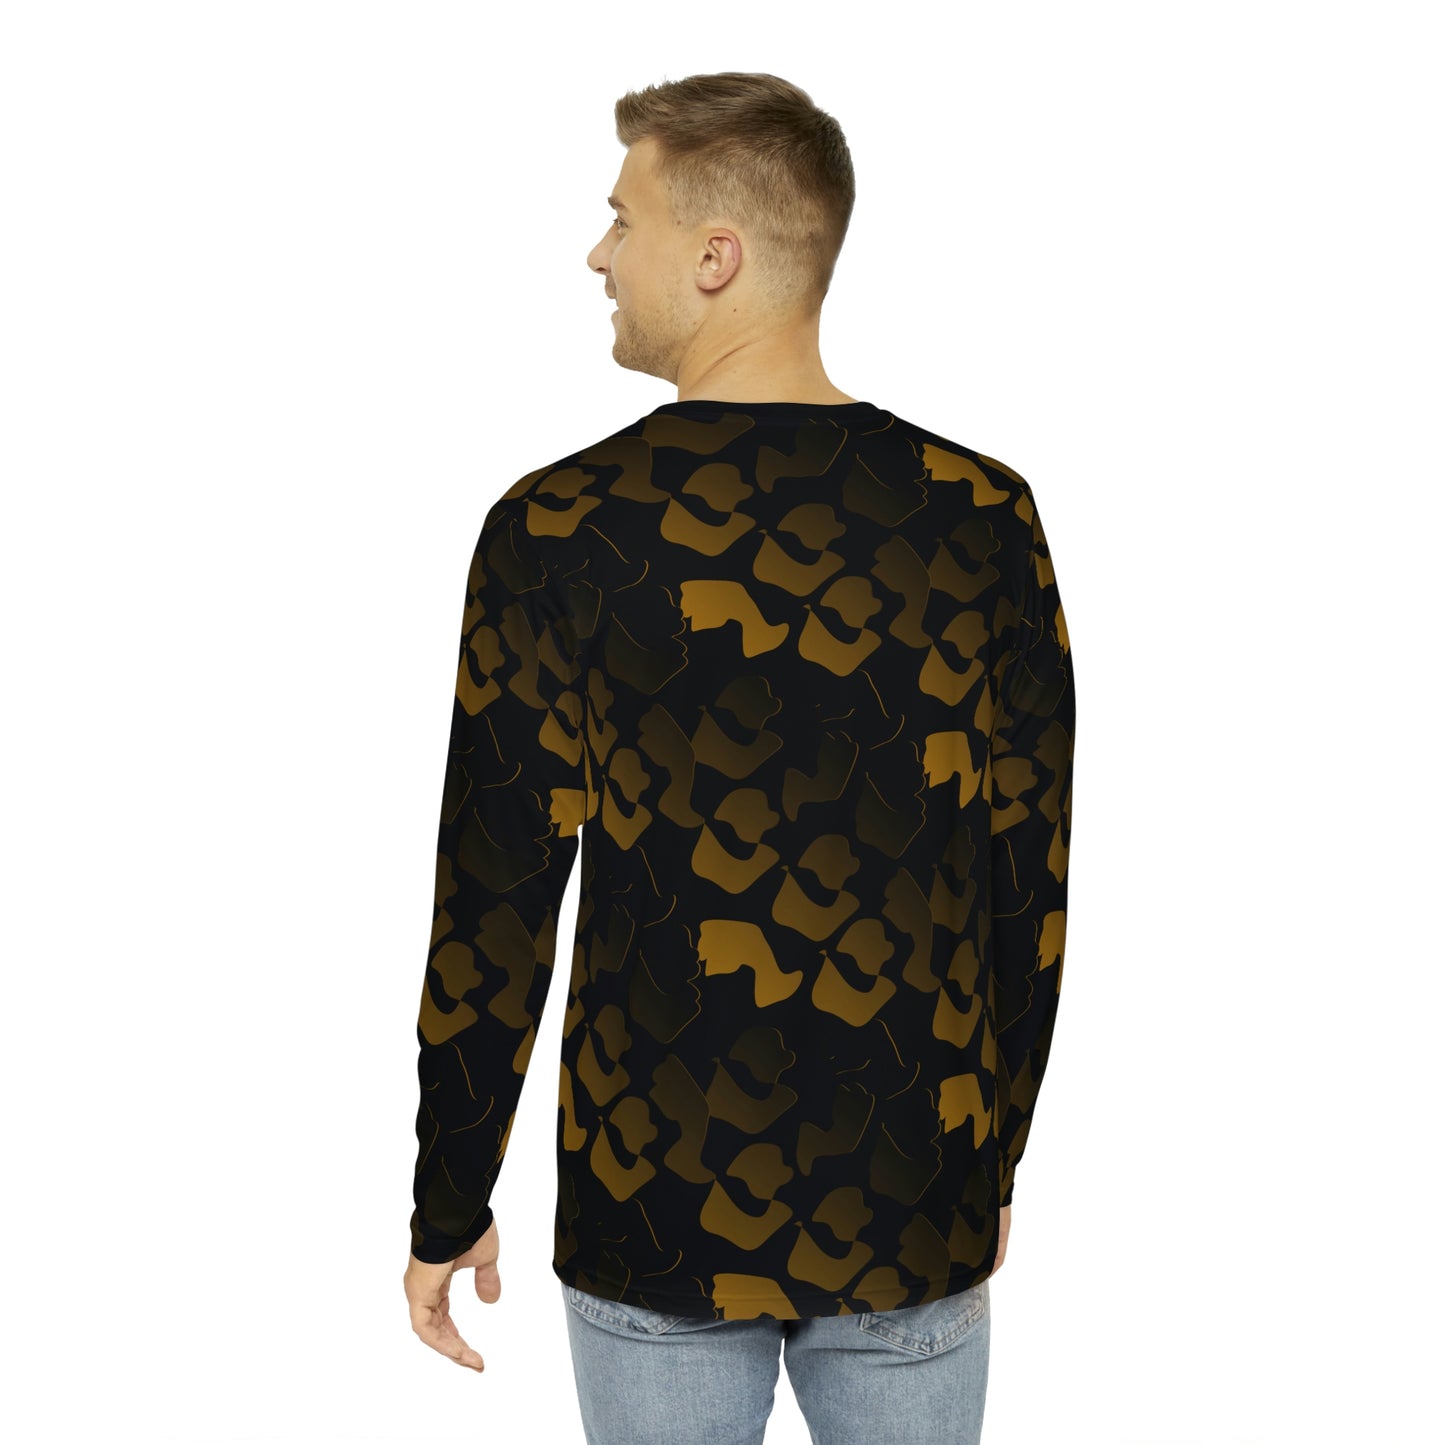 Black / Gold Men’s Long Sleeve T-Shirt - By Zag Savant